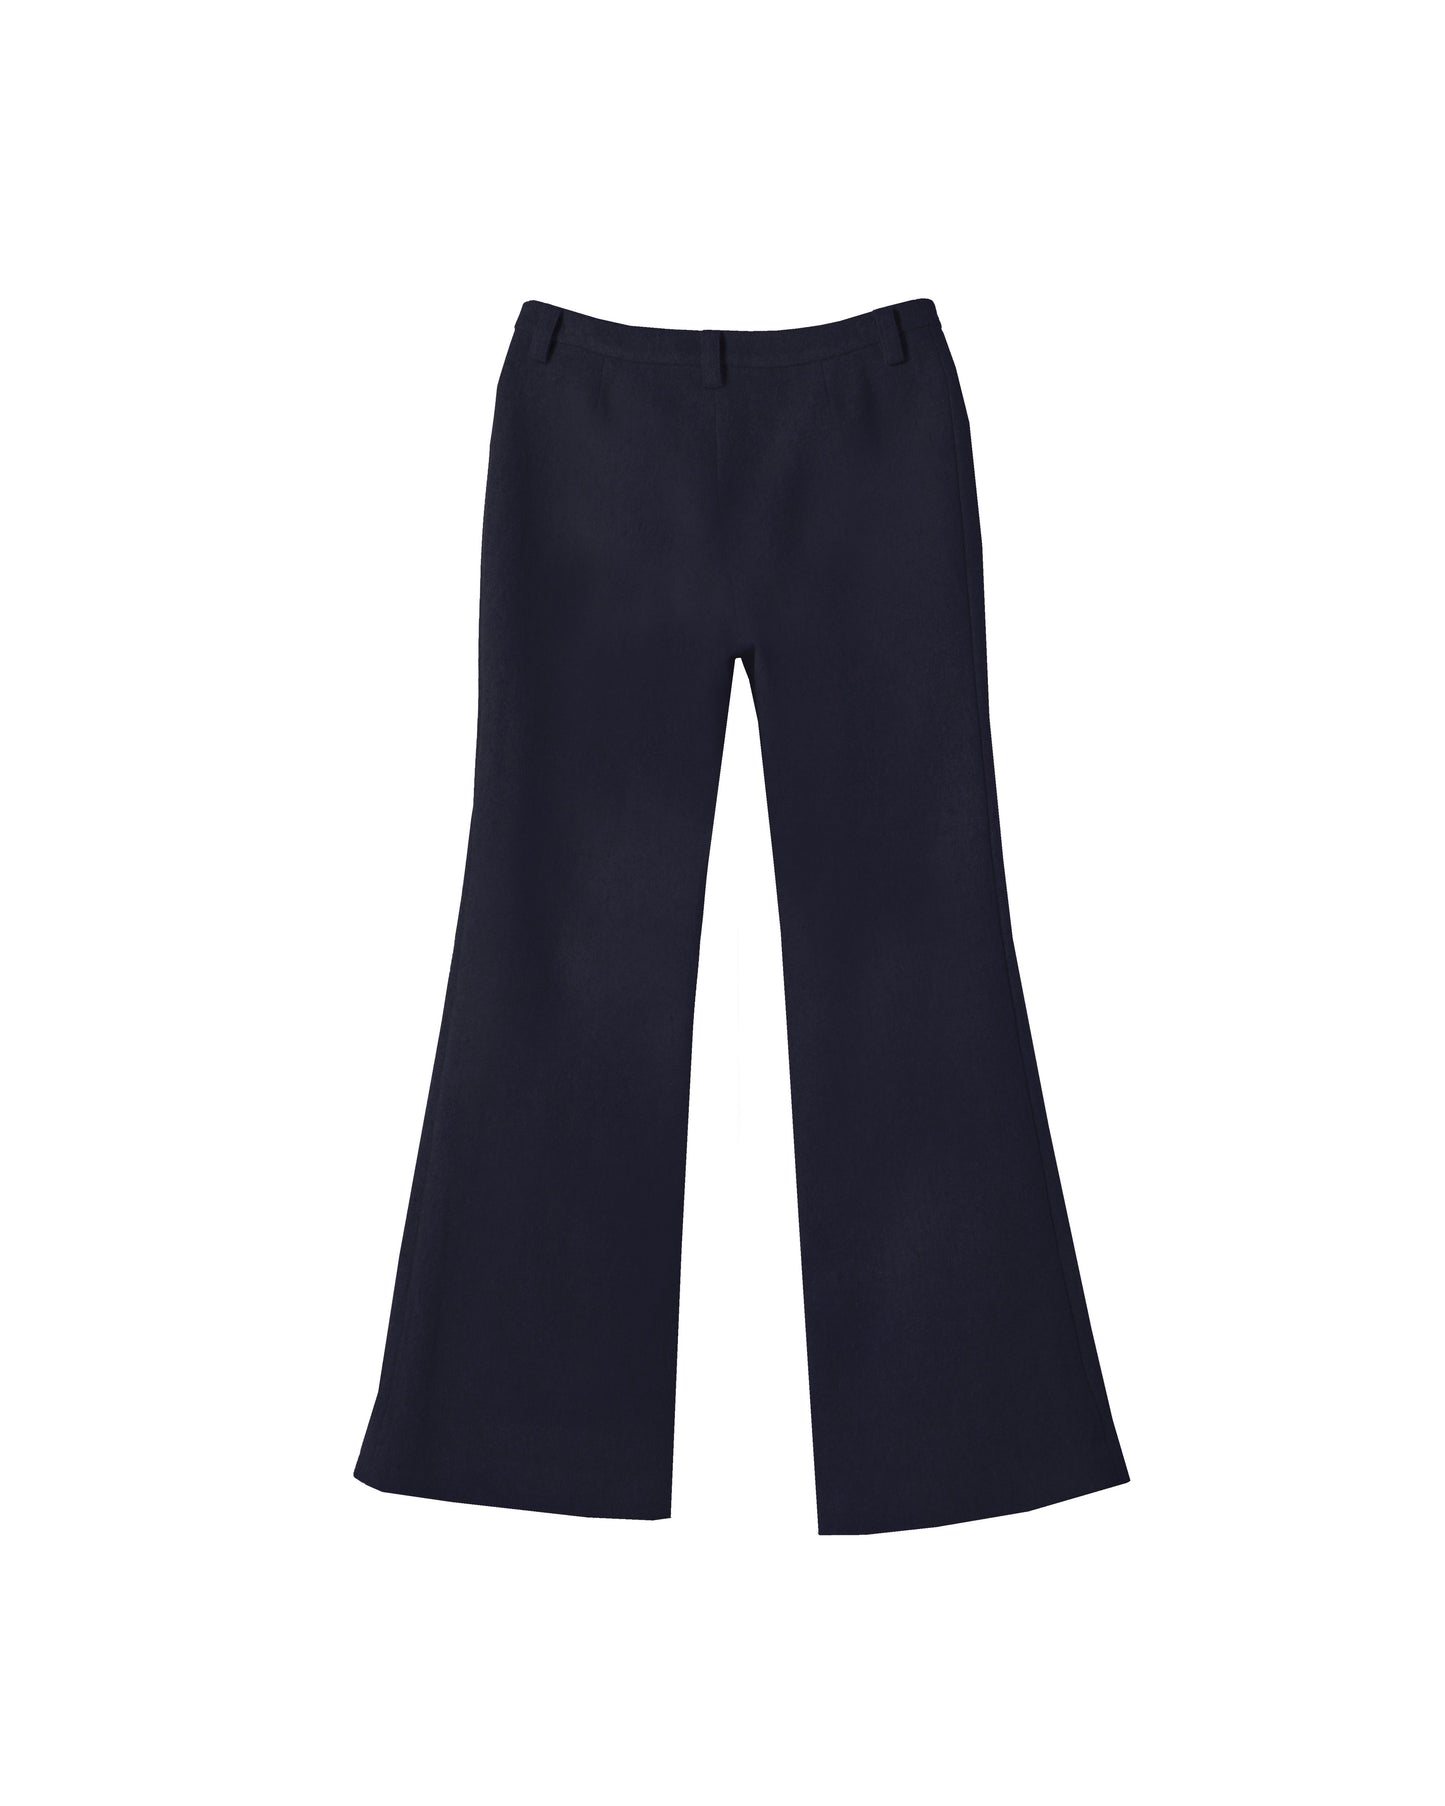 Wool bell-bottom pants(Navy)